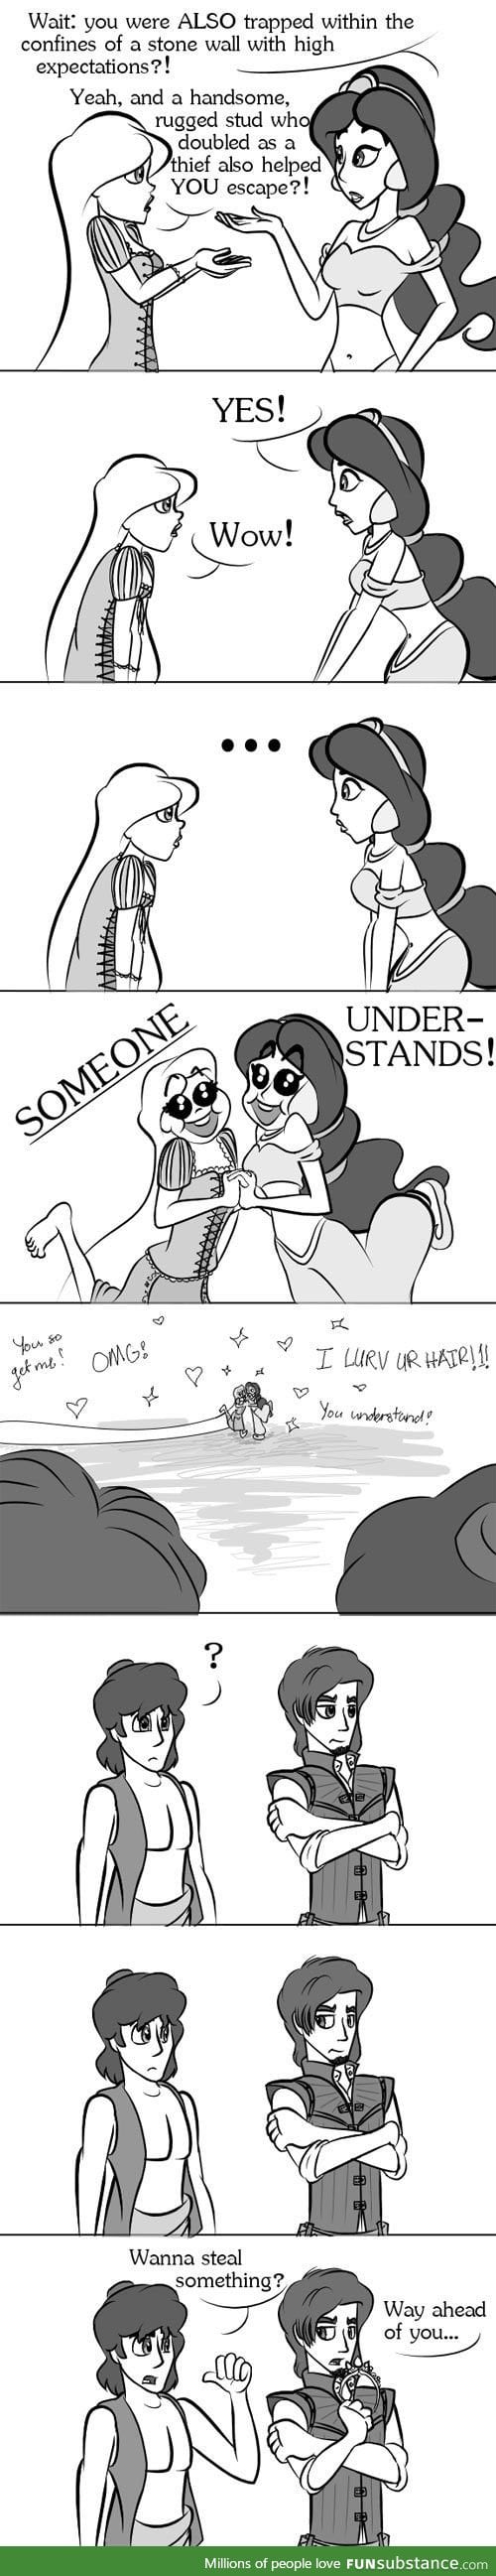 When Princesses meet....